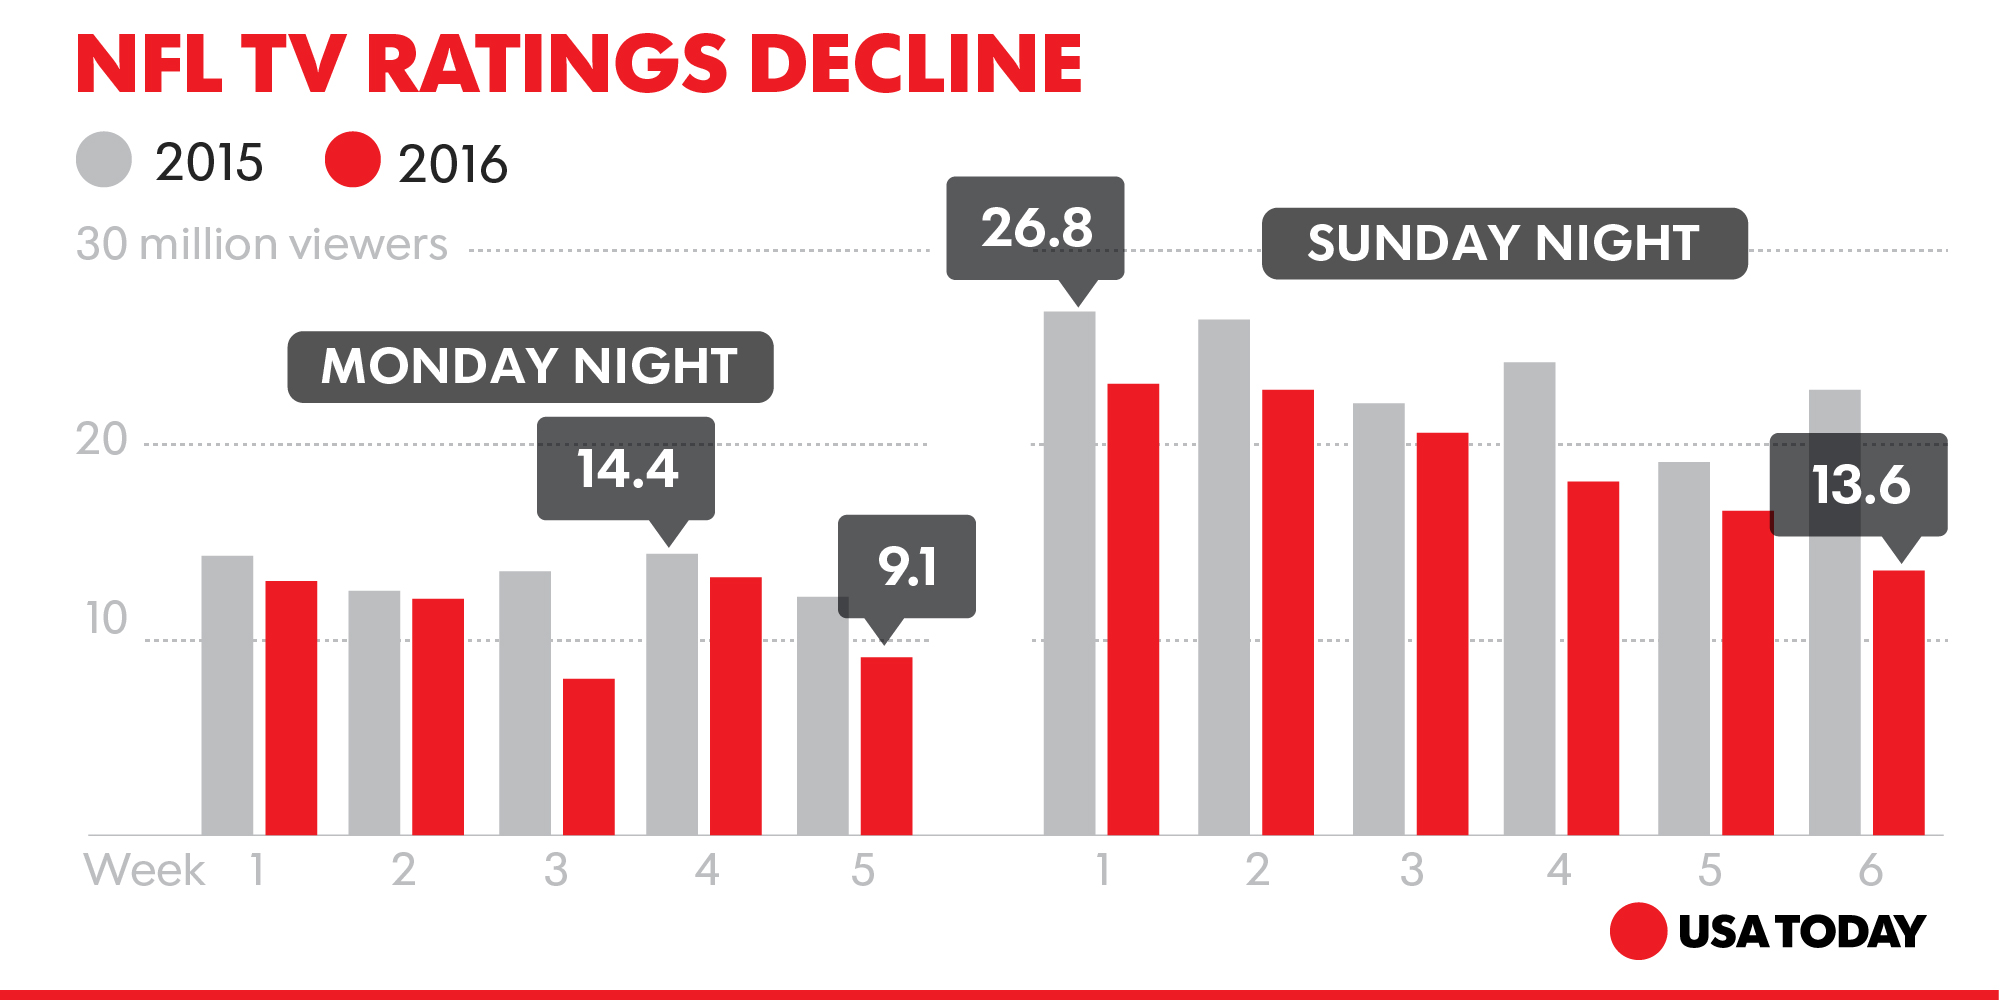 braces NFL advertisers for lower 'Thursday Night Football' ratings  than TV